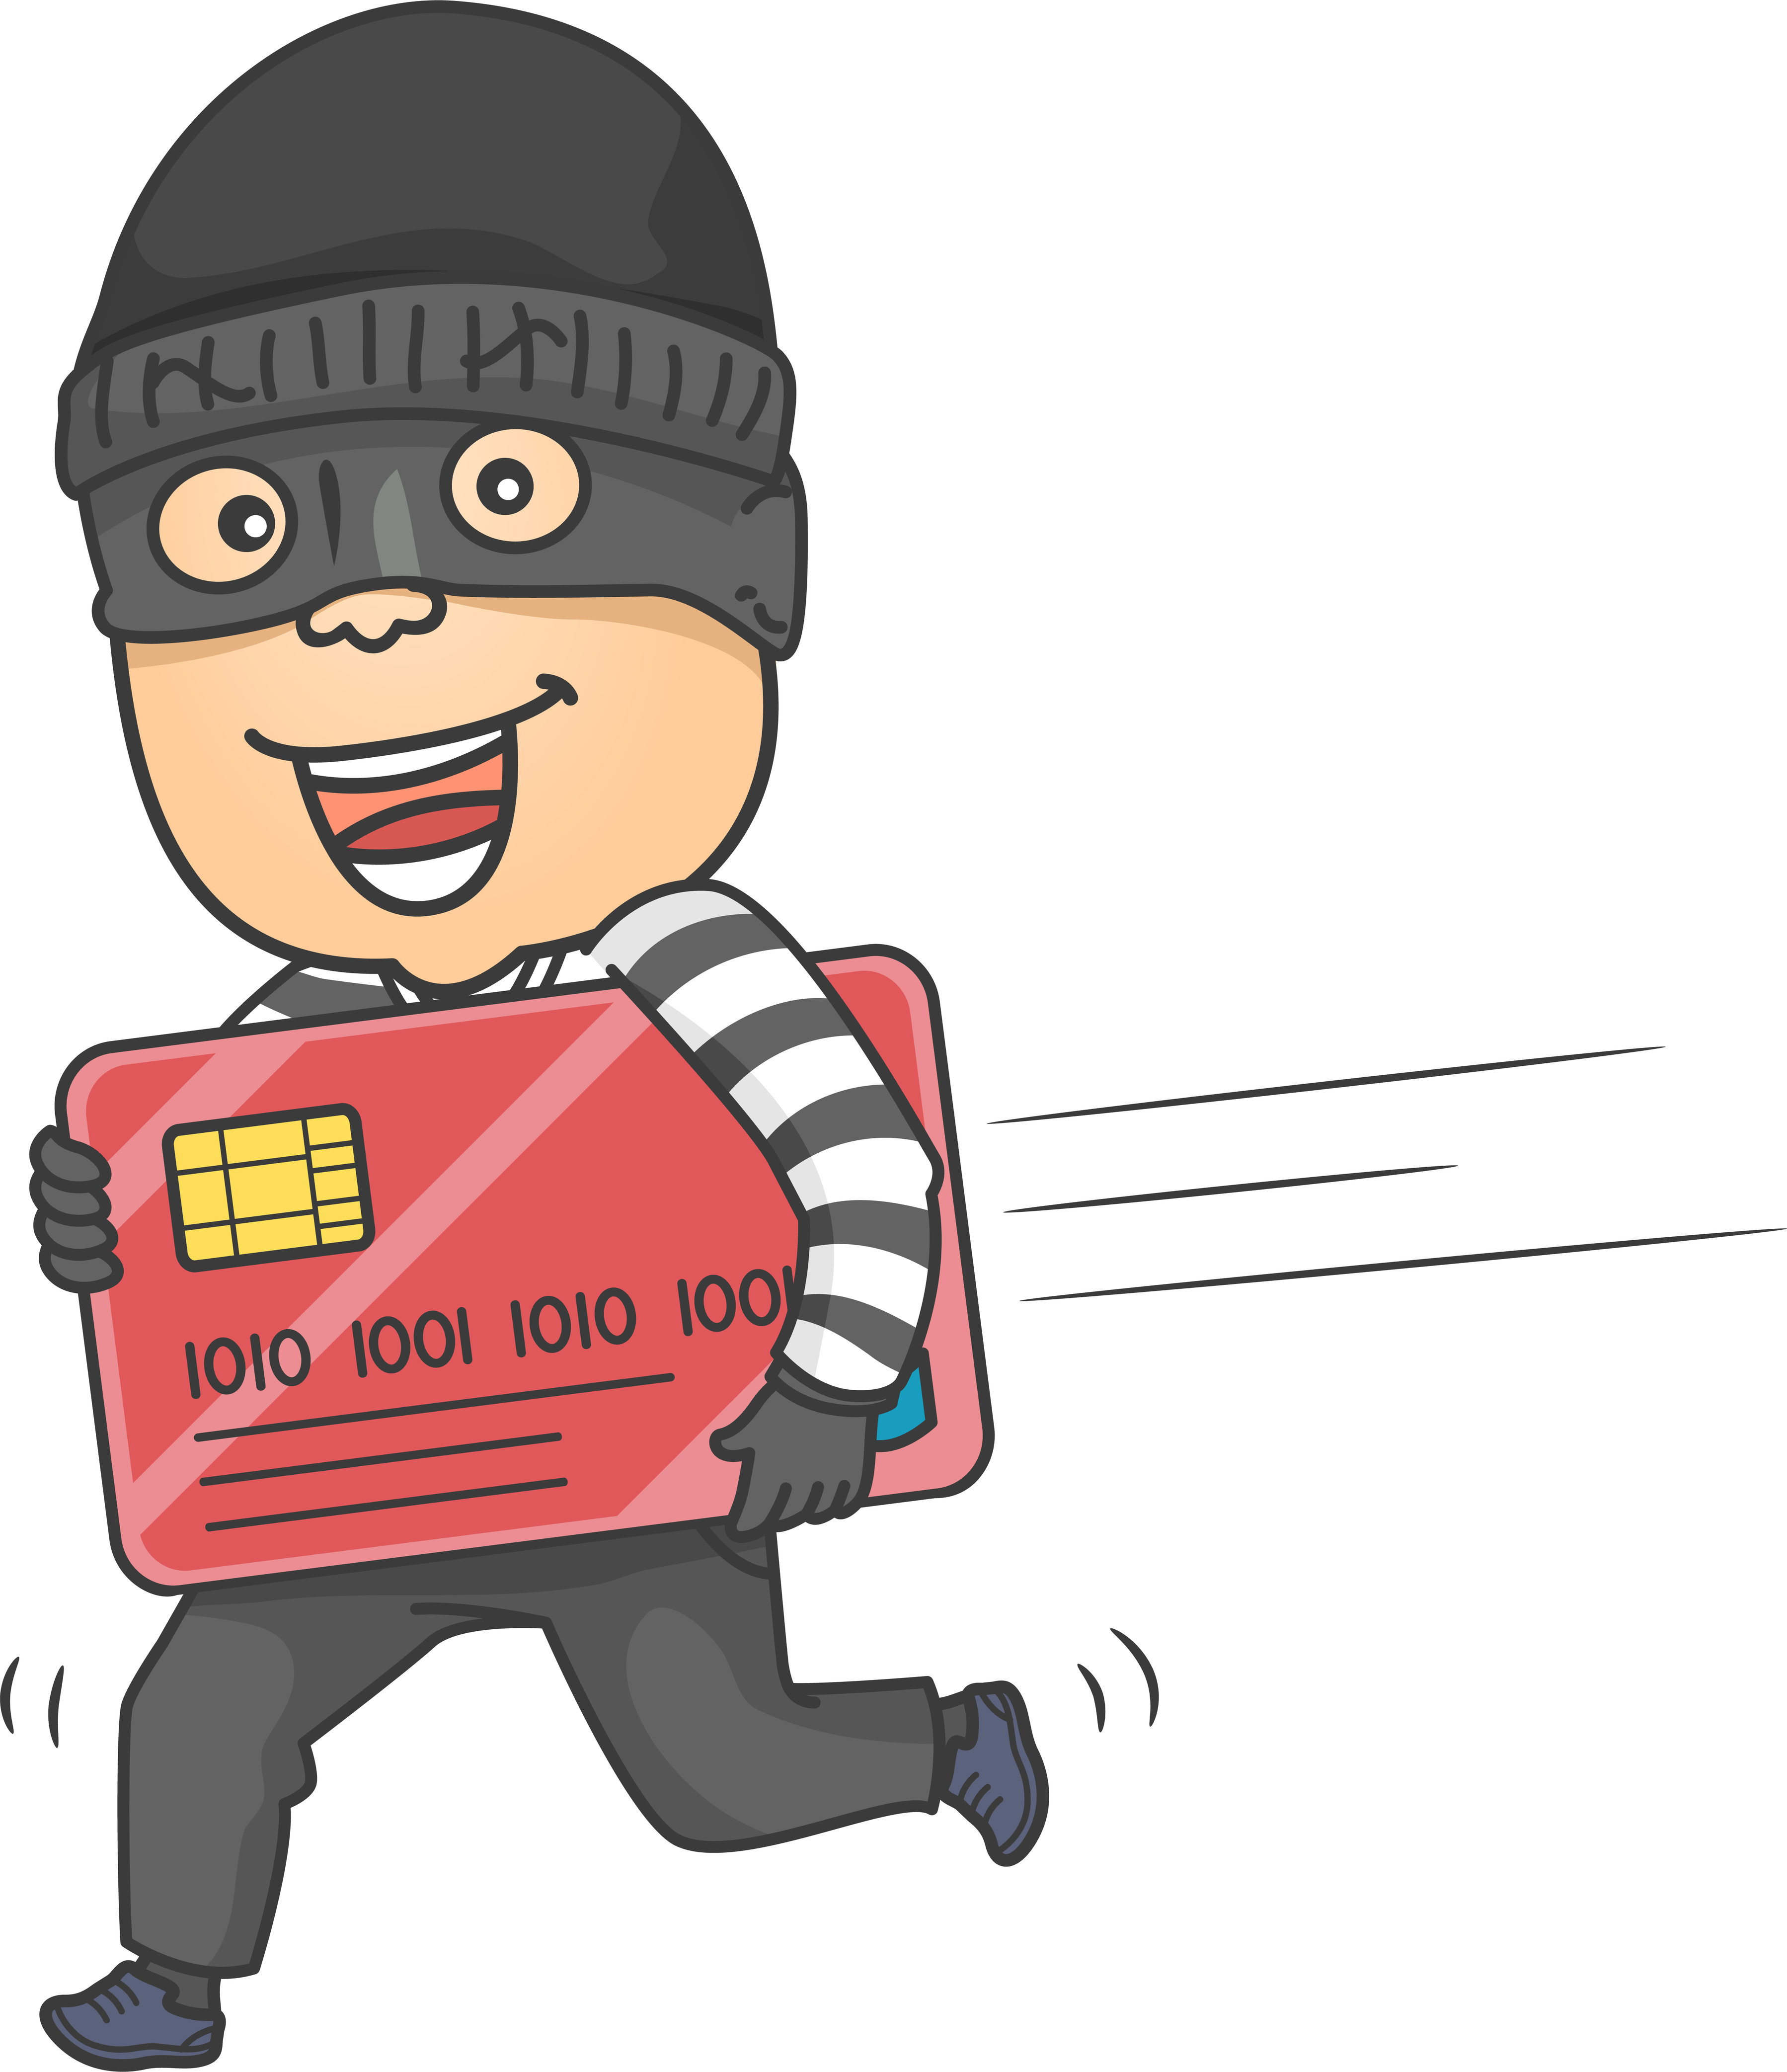 bandit or fraudster stealing a debit card